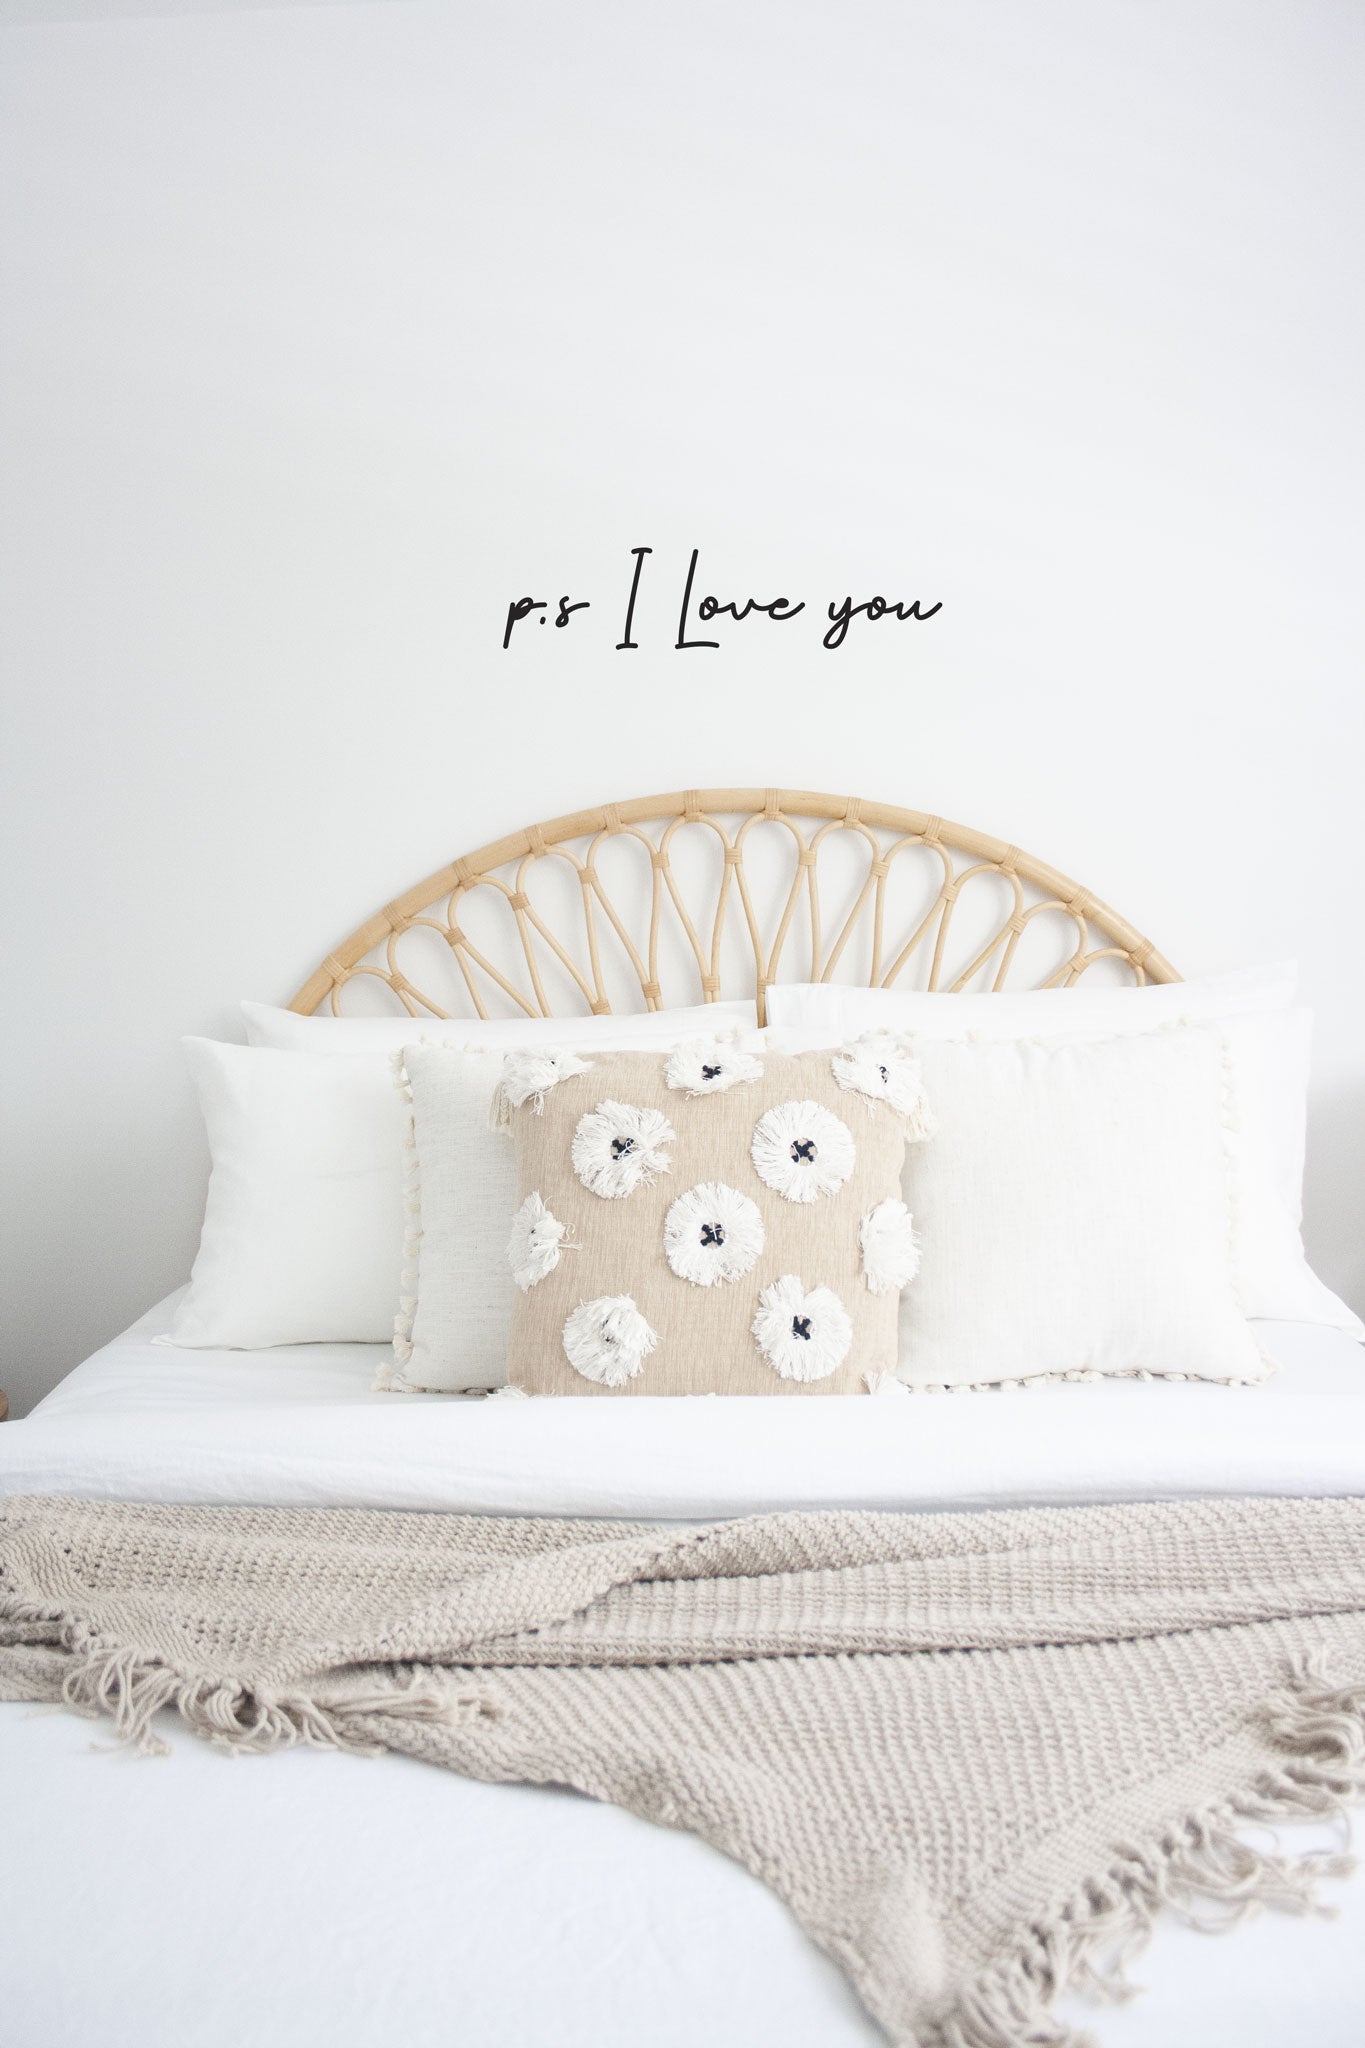 Above Bed Romantic Love Wall Sticker | A Creative Hart - A Creative Hart